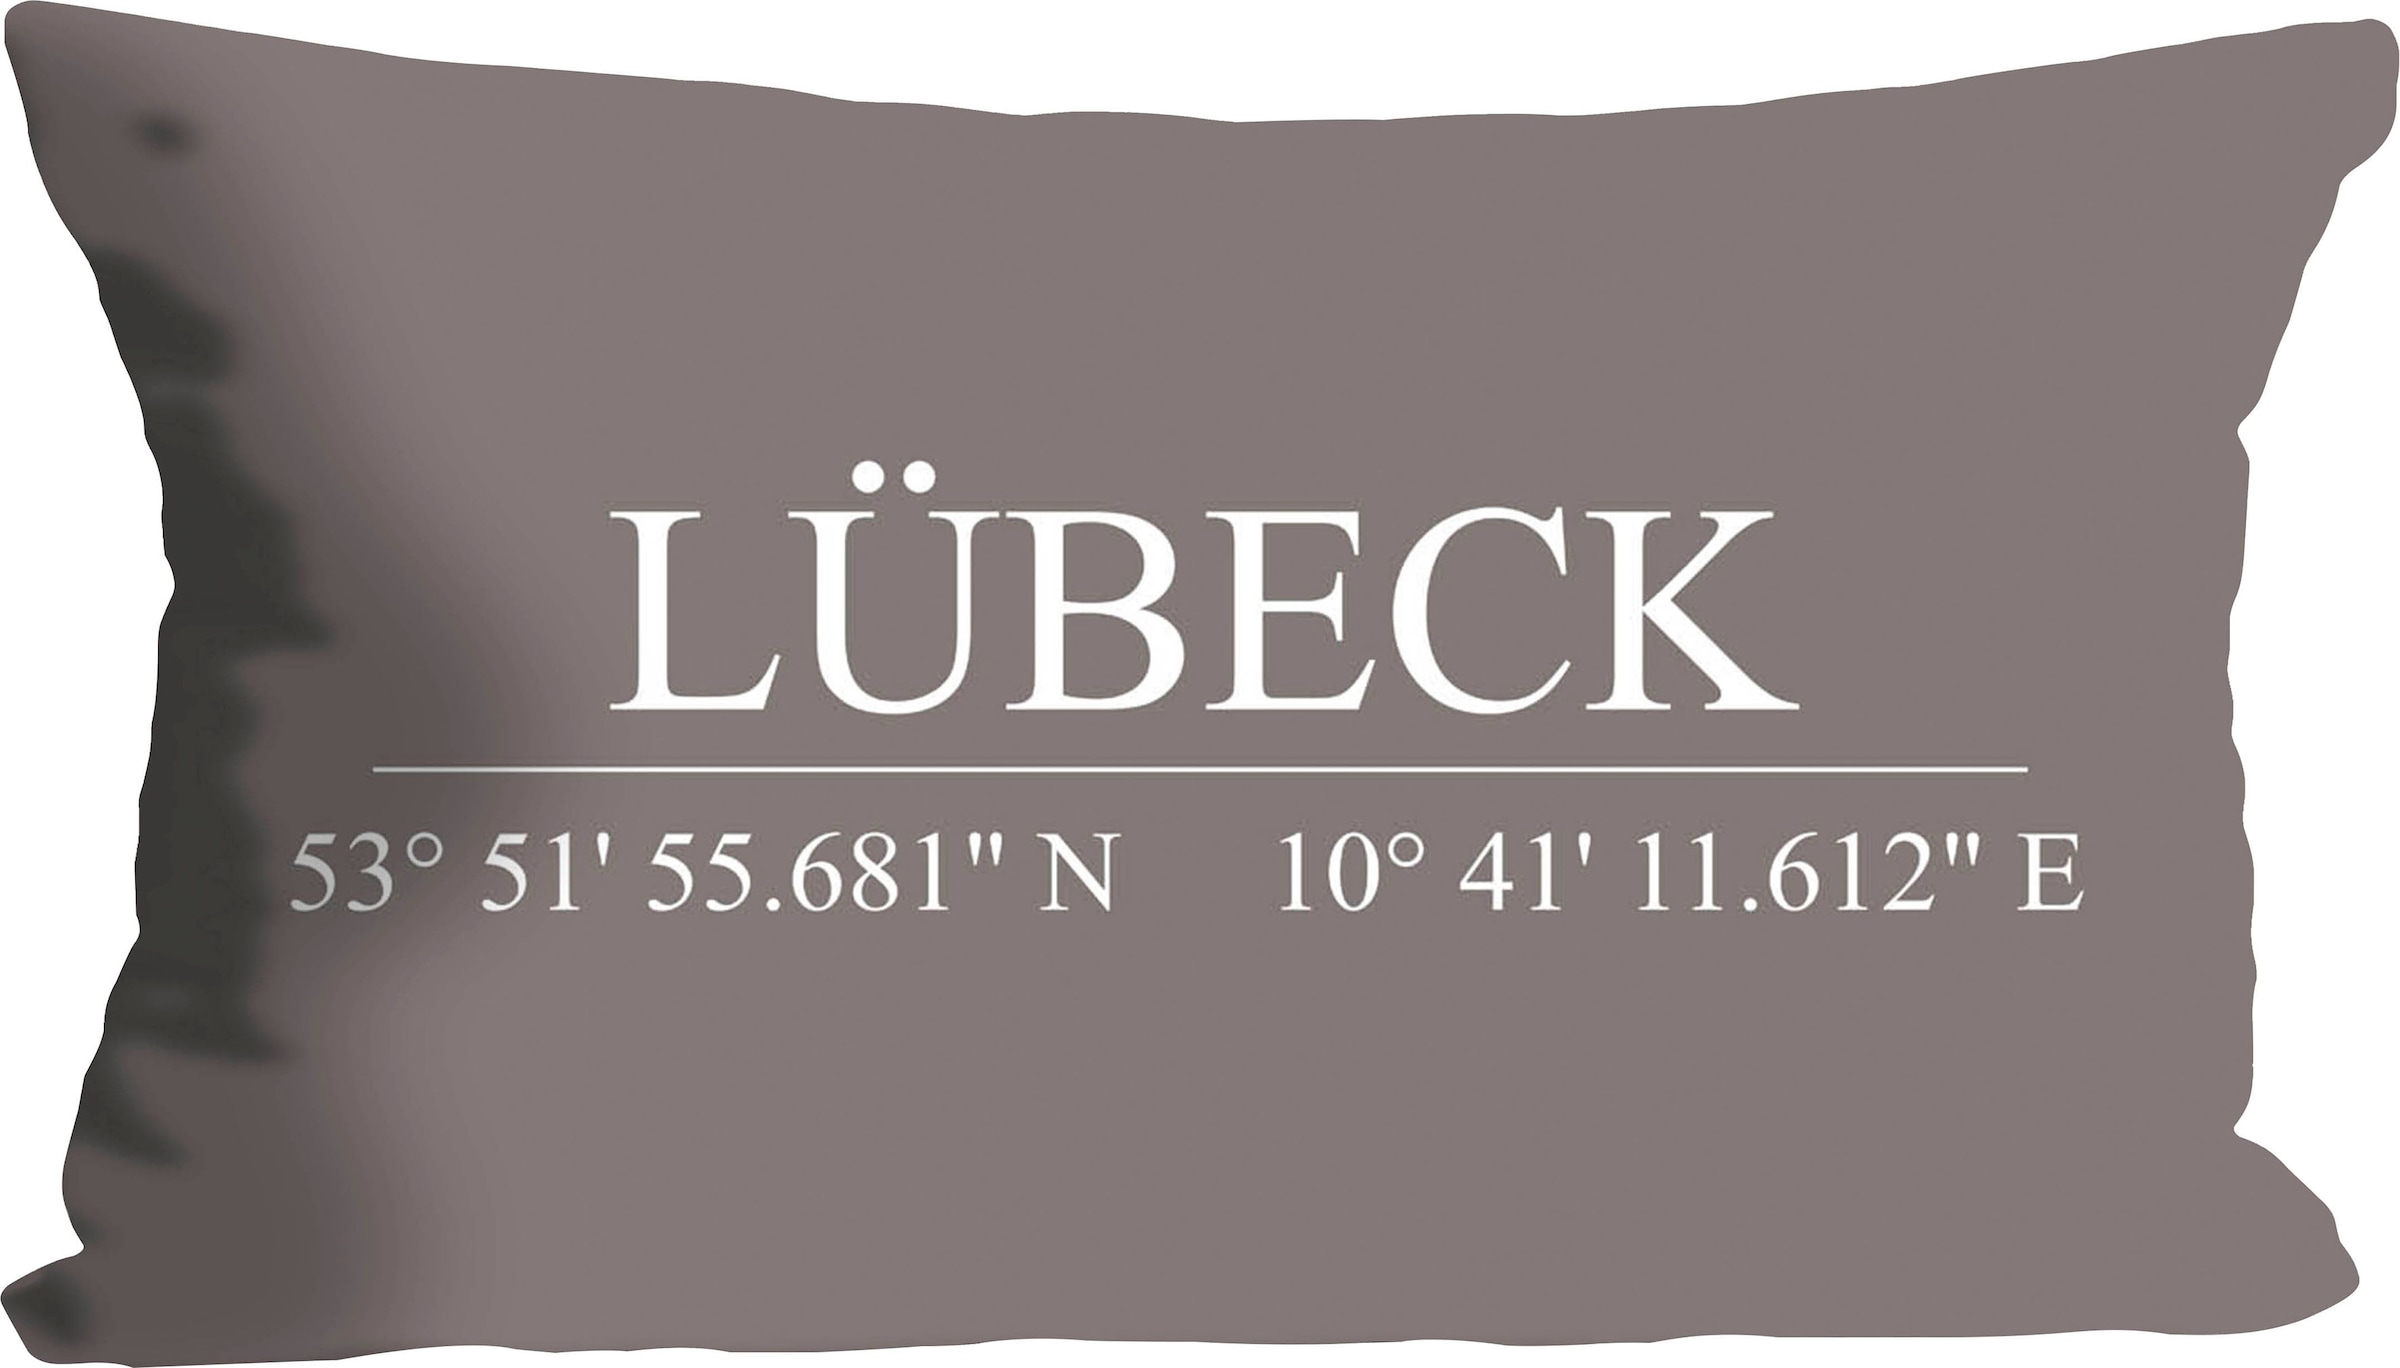 queence Dekokissen »Lübeck«, mit Schriftzug, Kissenhülle ohne Füllung, 1 Stück